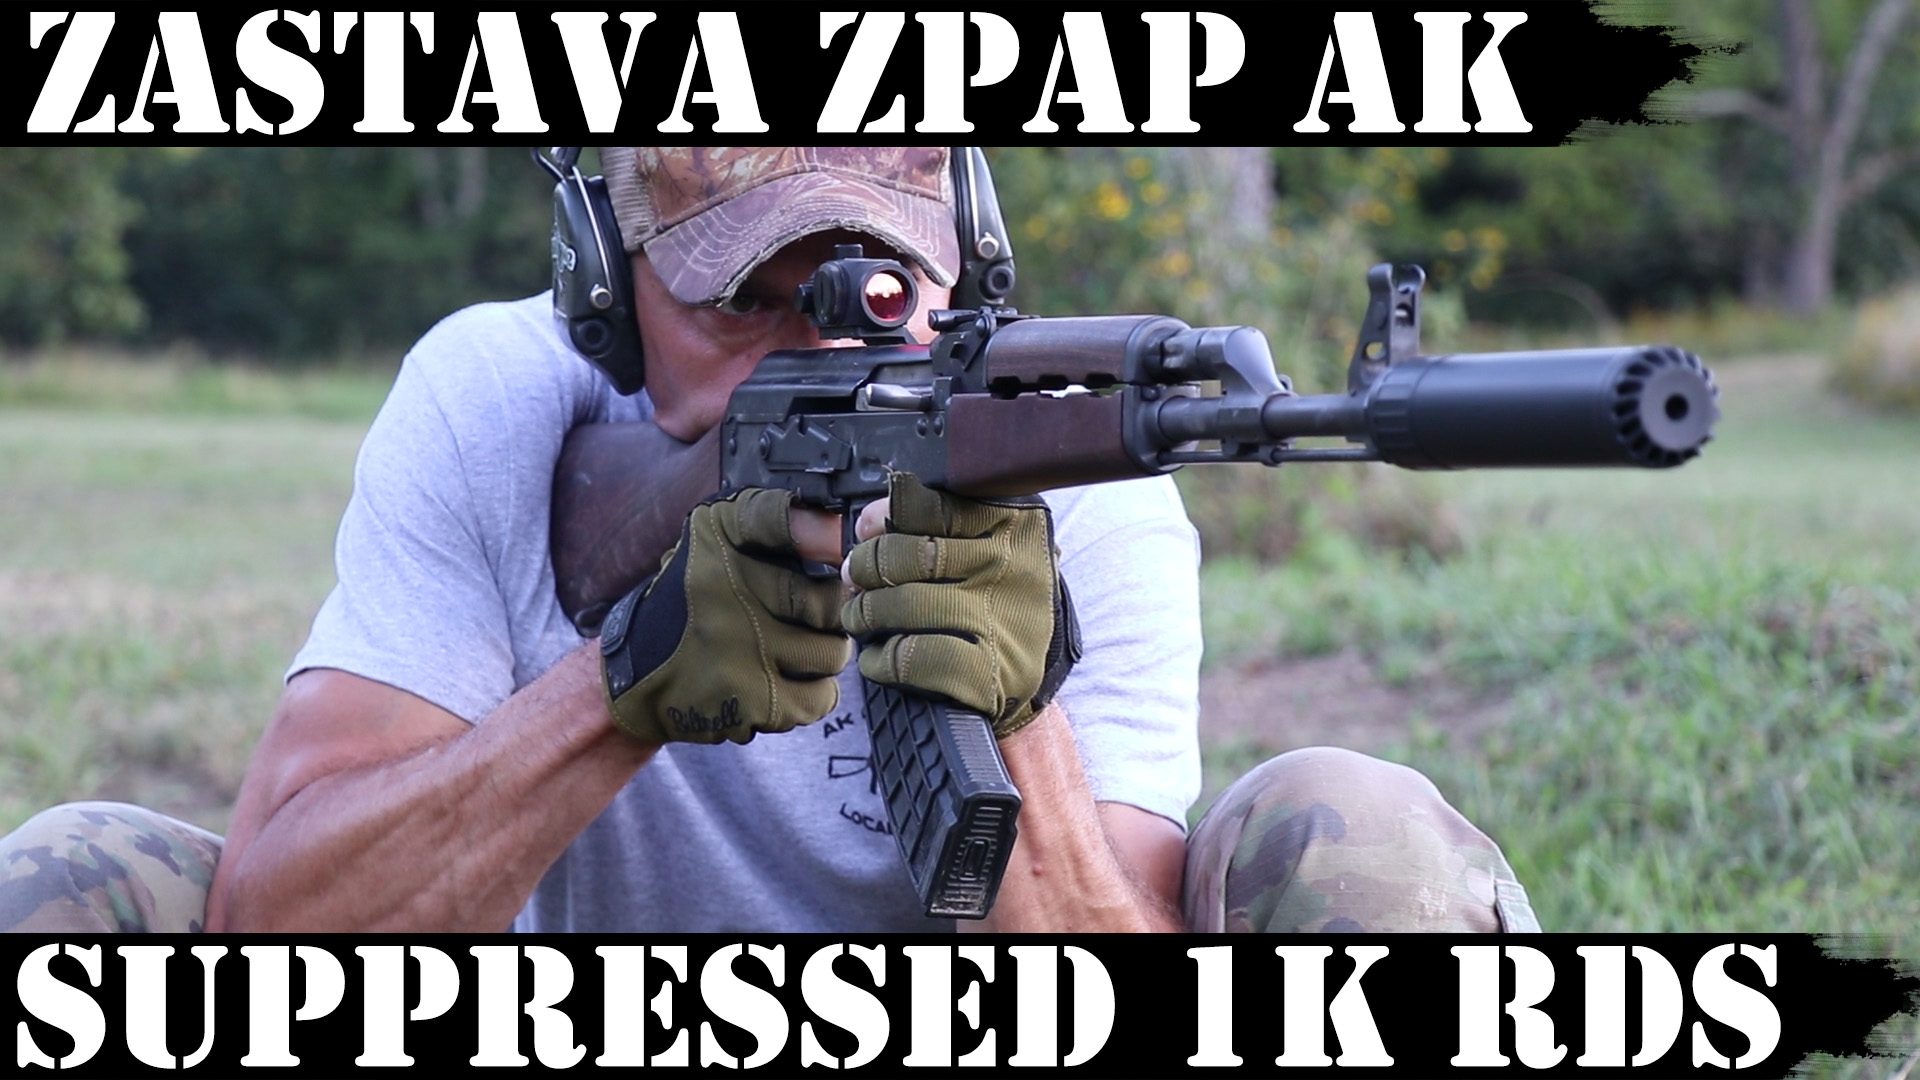 Zastava ZPAP AK: Suppressed 1,000 Rds Later!